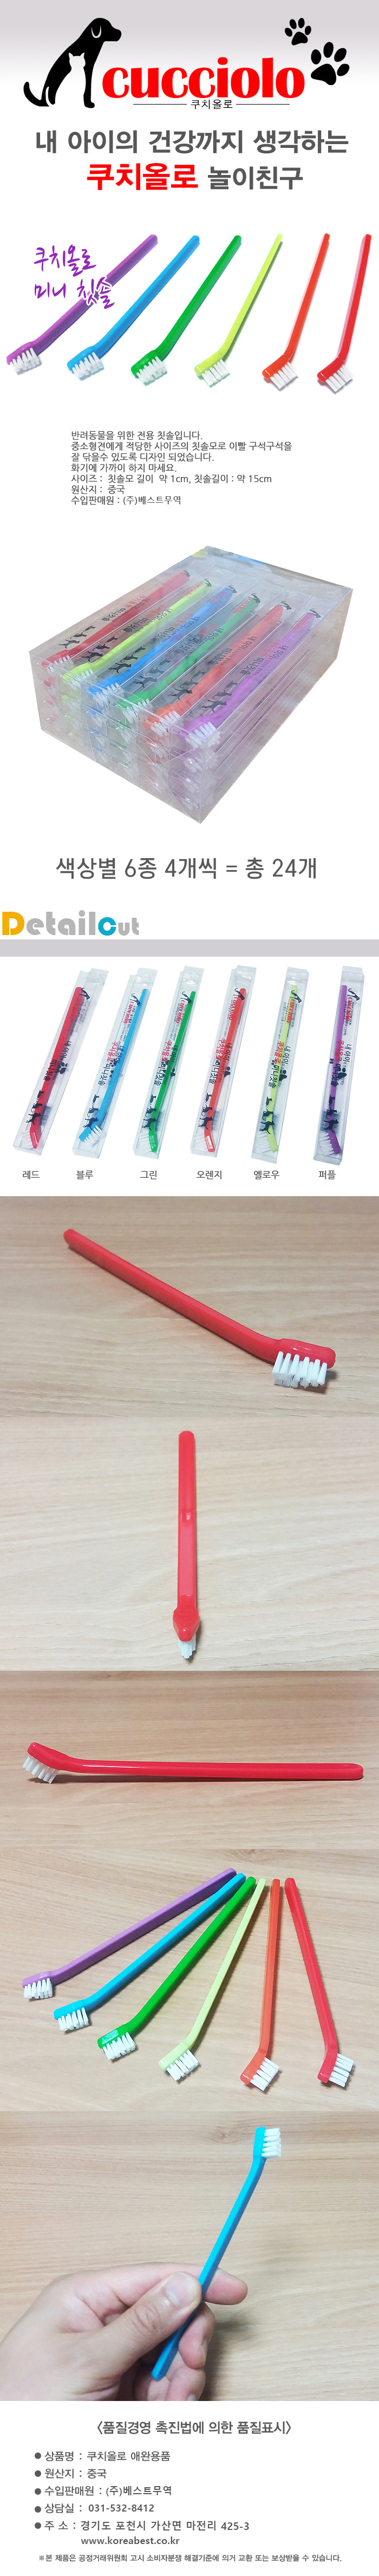 cucciolo_mini_toothbrush.jpg